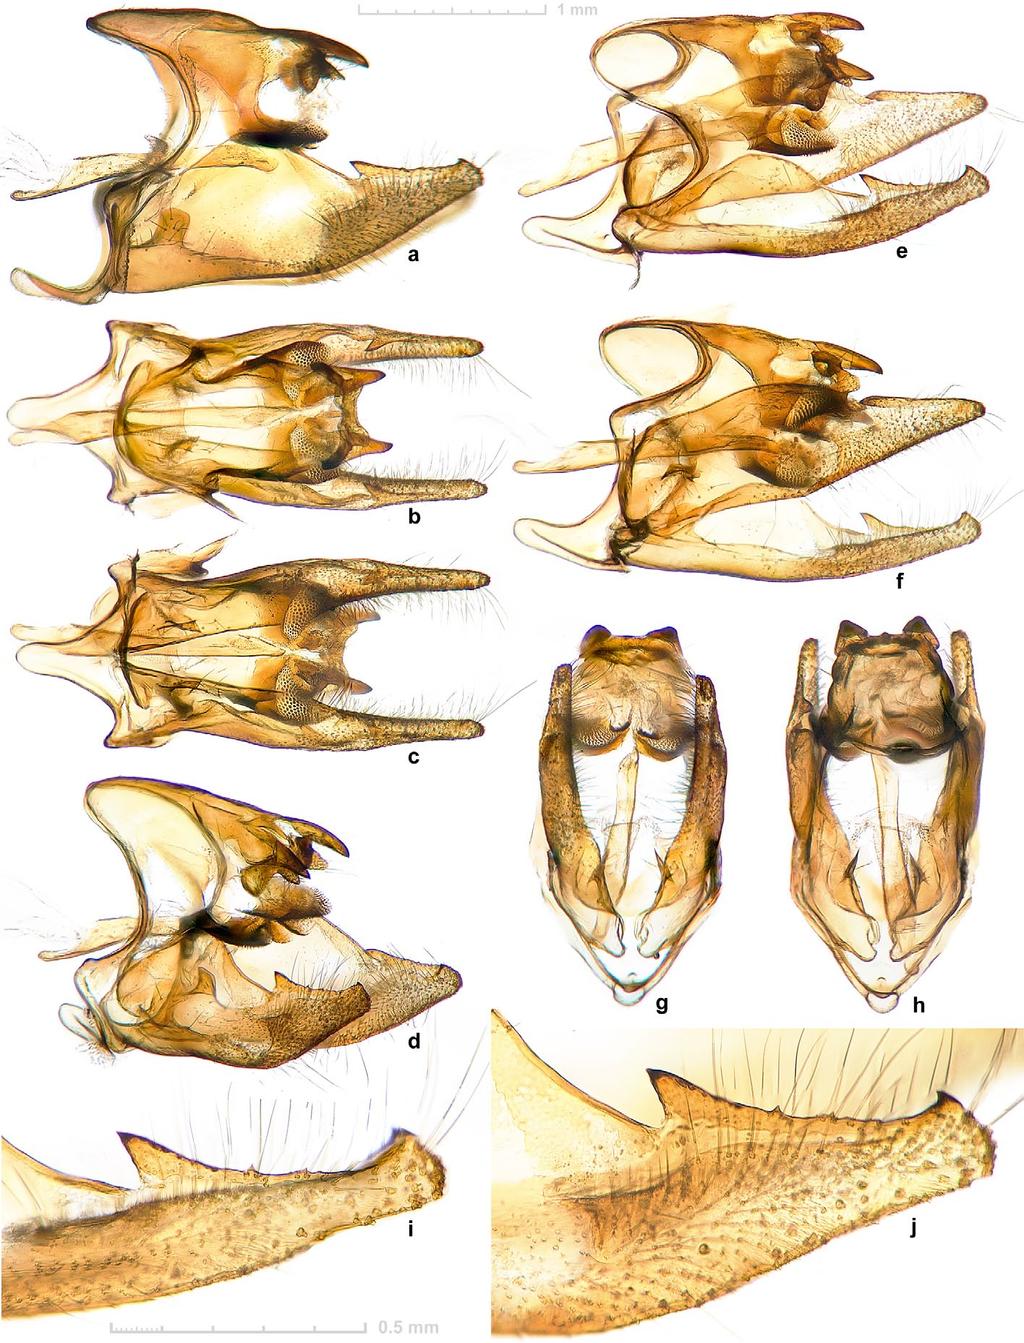 10 TROP. LEPID. RES., 23(1): 1-13, 2013 GRISHIN: New species of Potamanaxas from Peru Fig. 58. Potamanaxas lamasi n. sp. male genitalia, holotype. a-h.